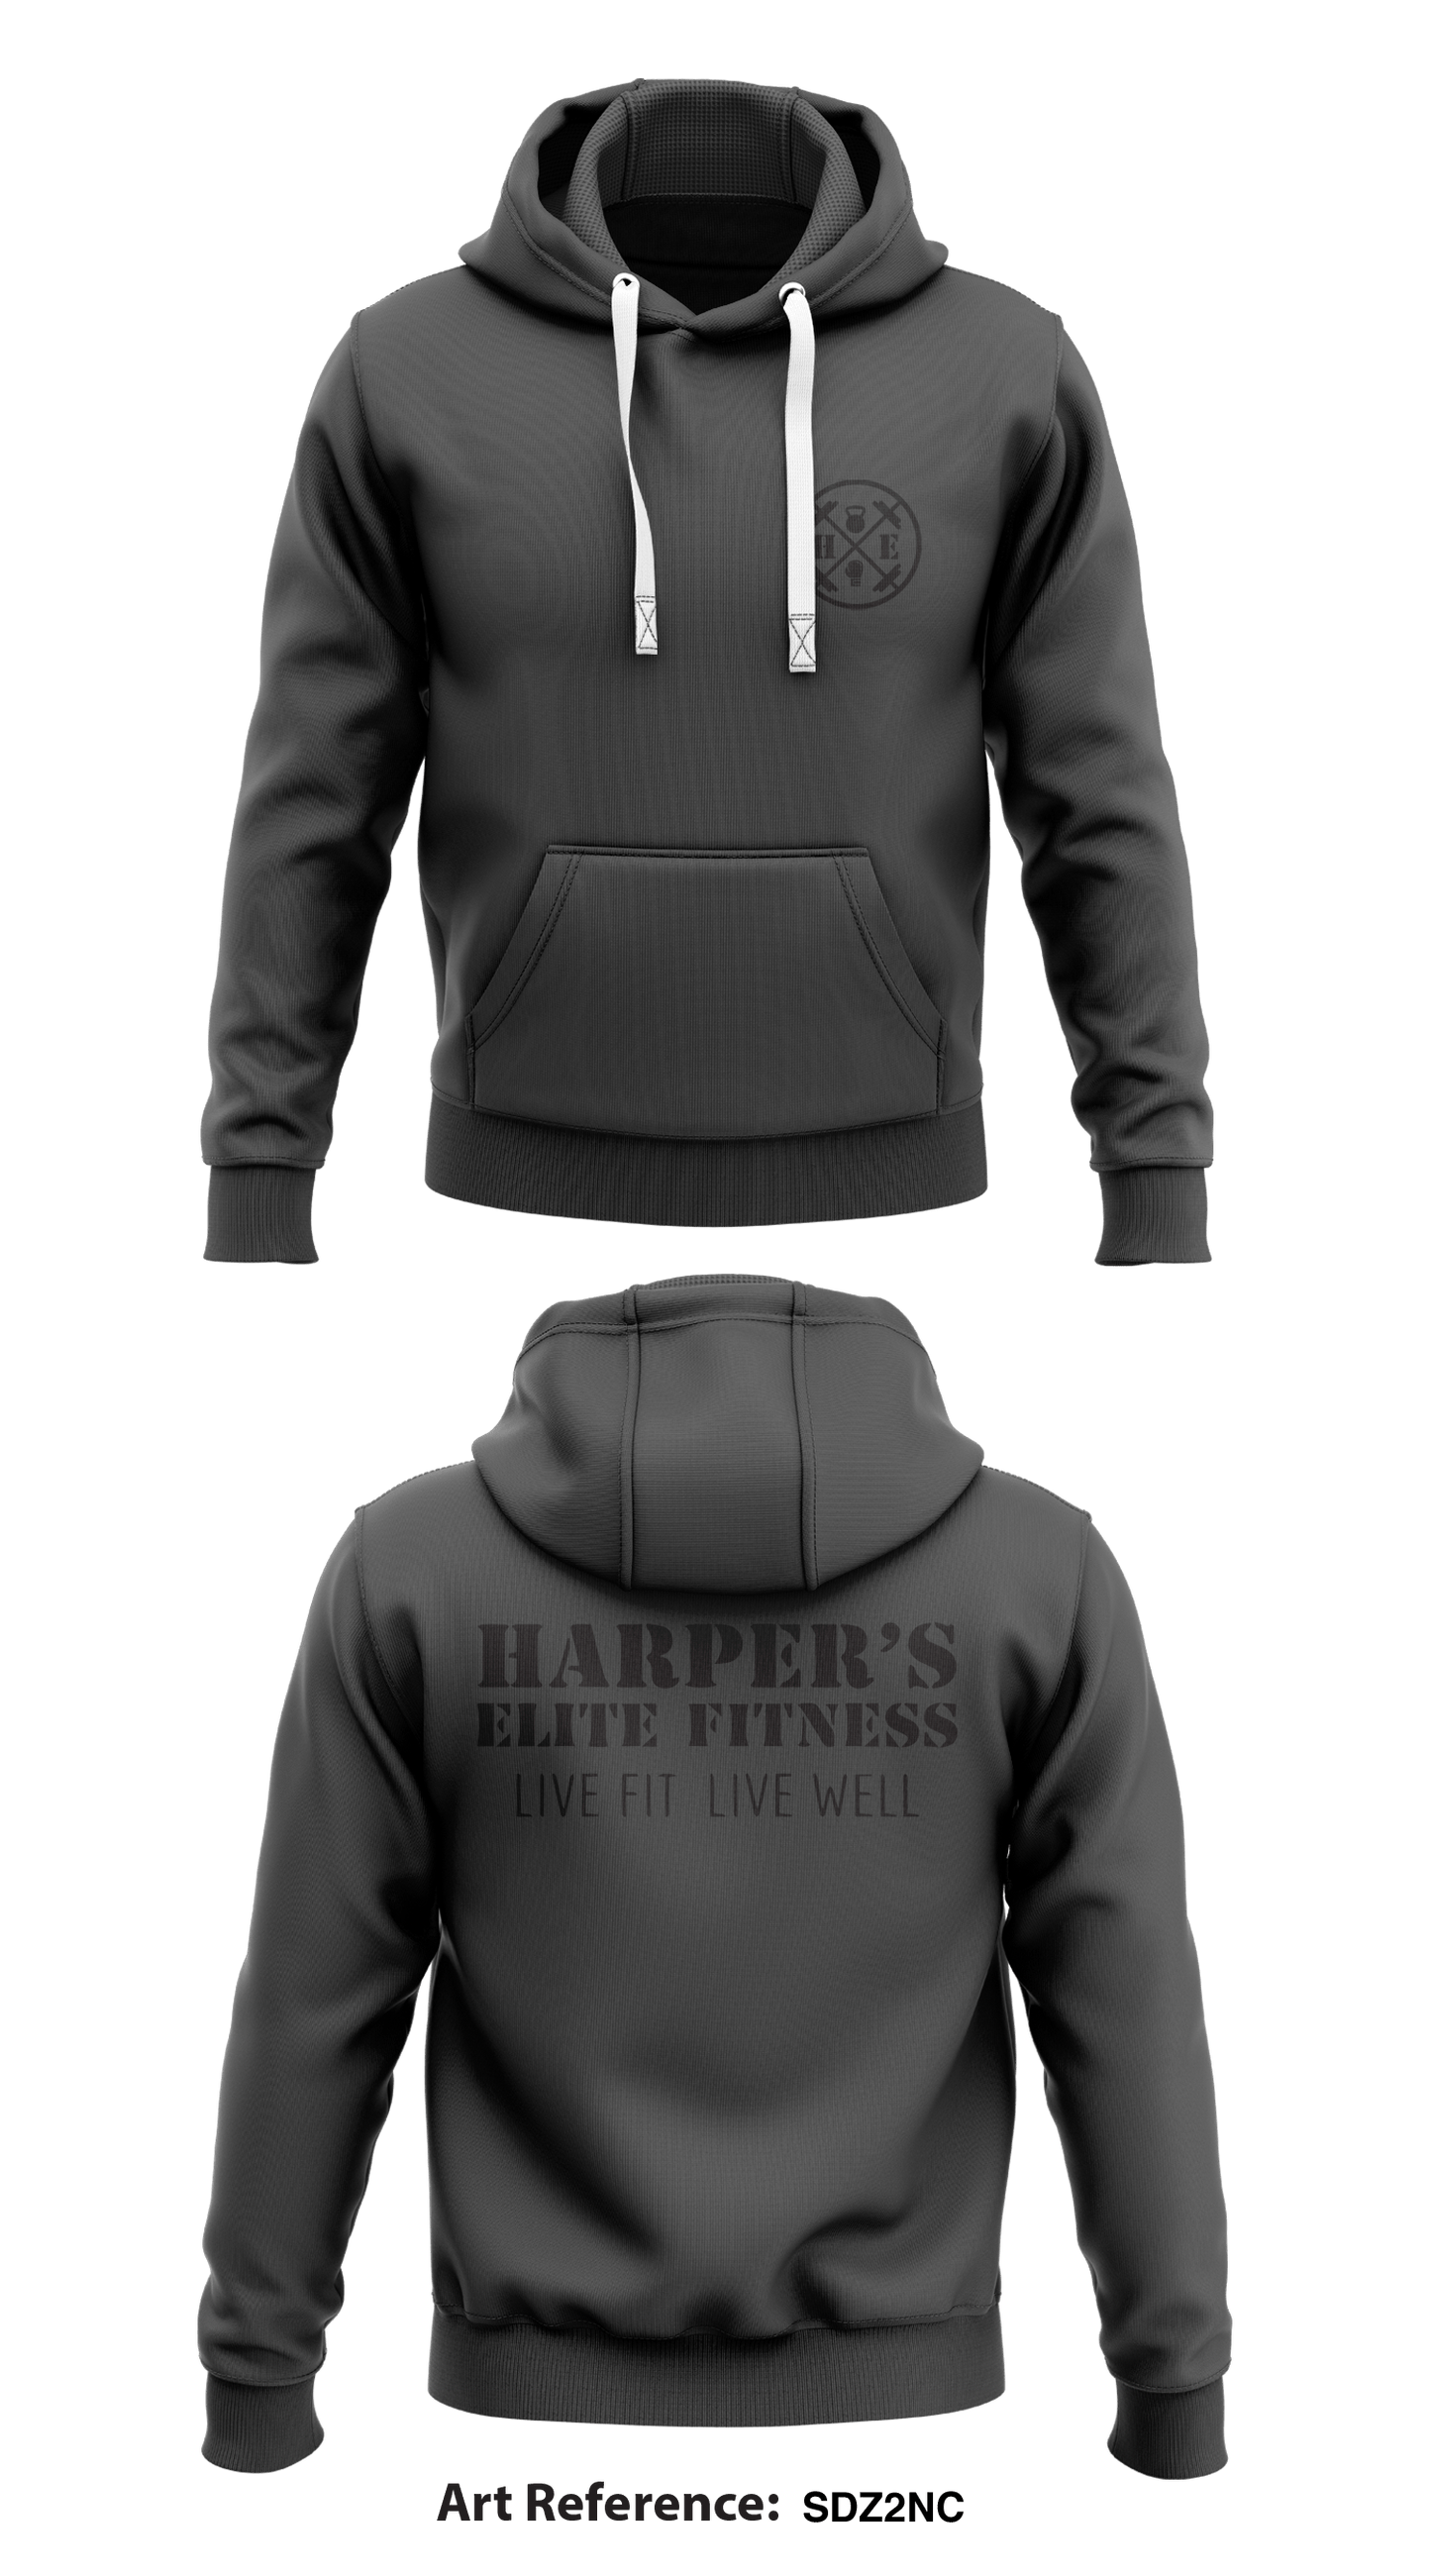 Harpers Elite Fitness Store 1  Core Men's Hooded Performance Sweatshirt - sDZ2Nc